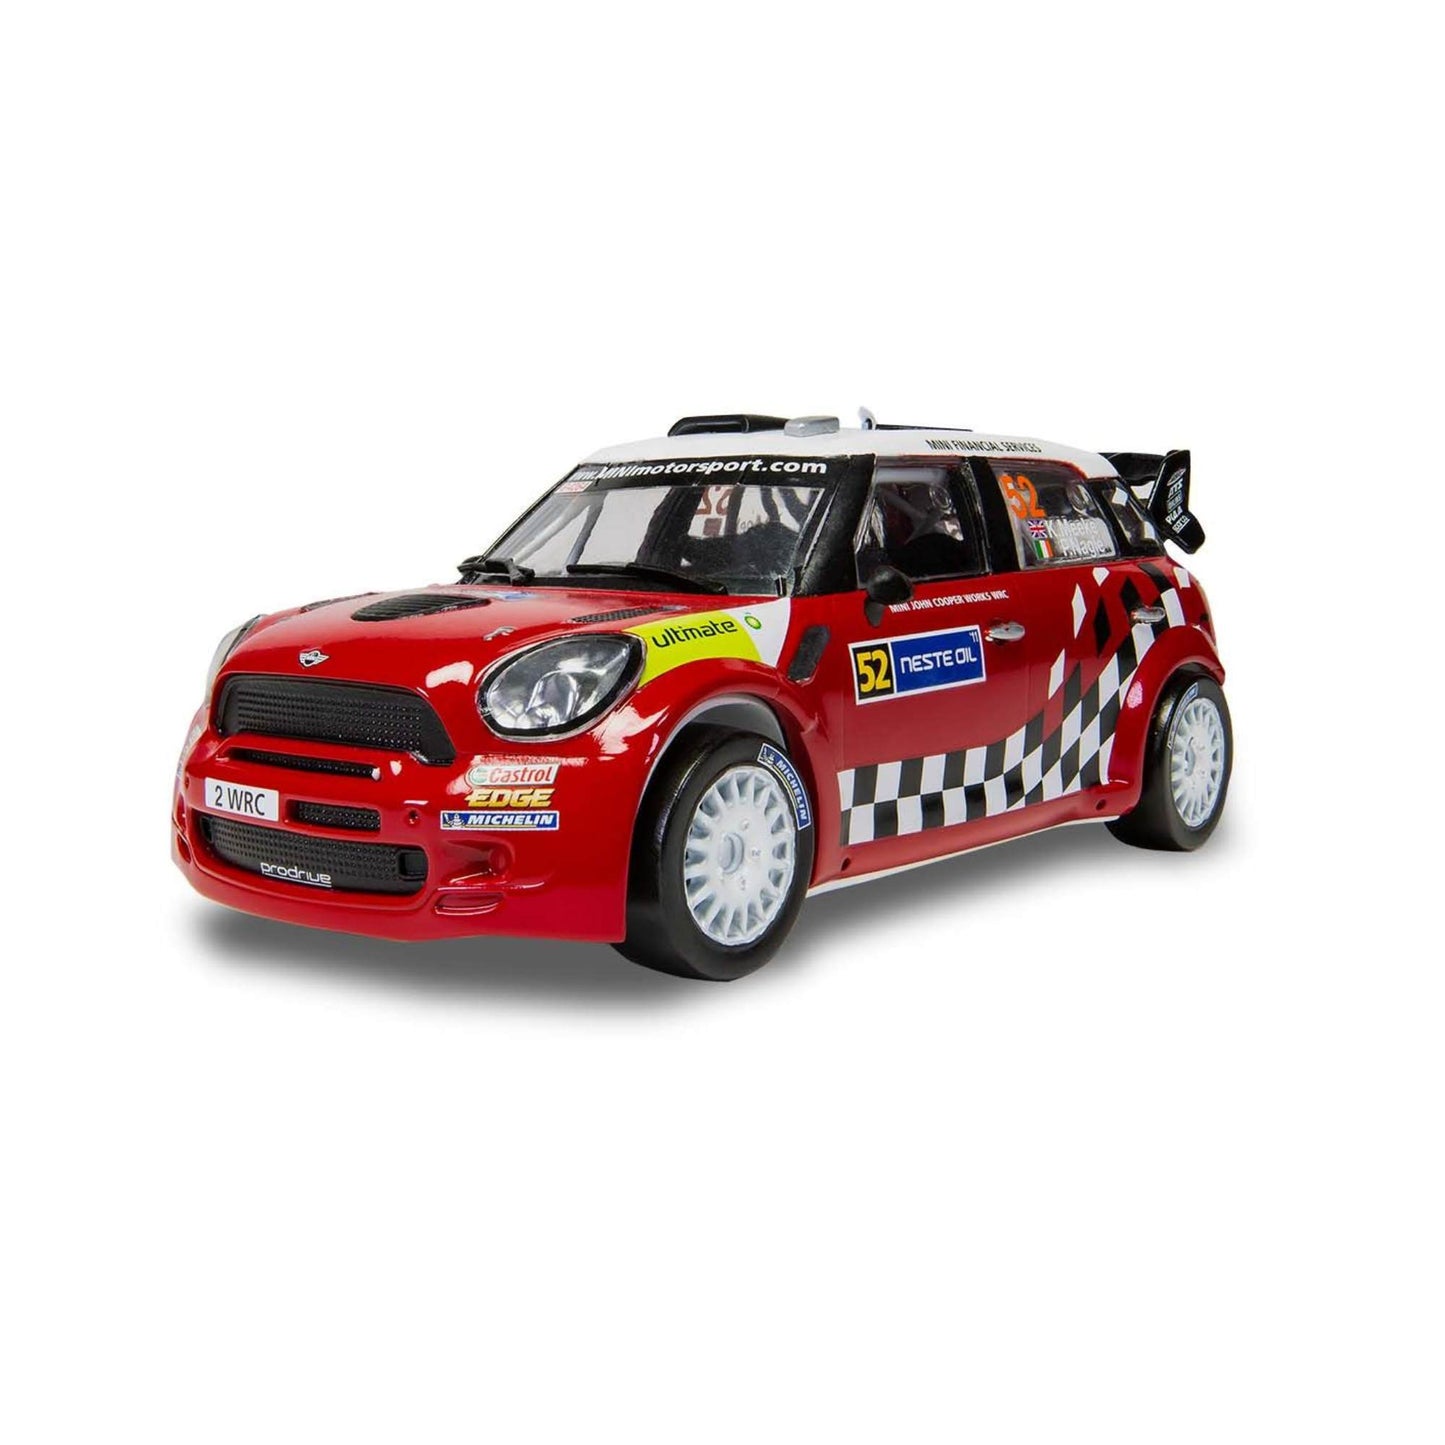 Airfix Gift Set Mini Countryman WRC 1:32